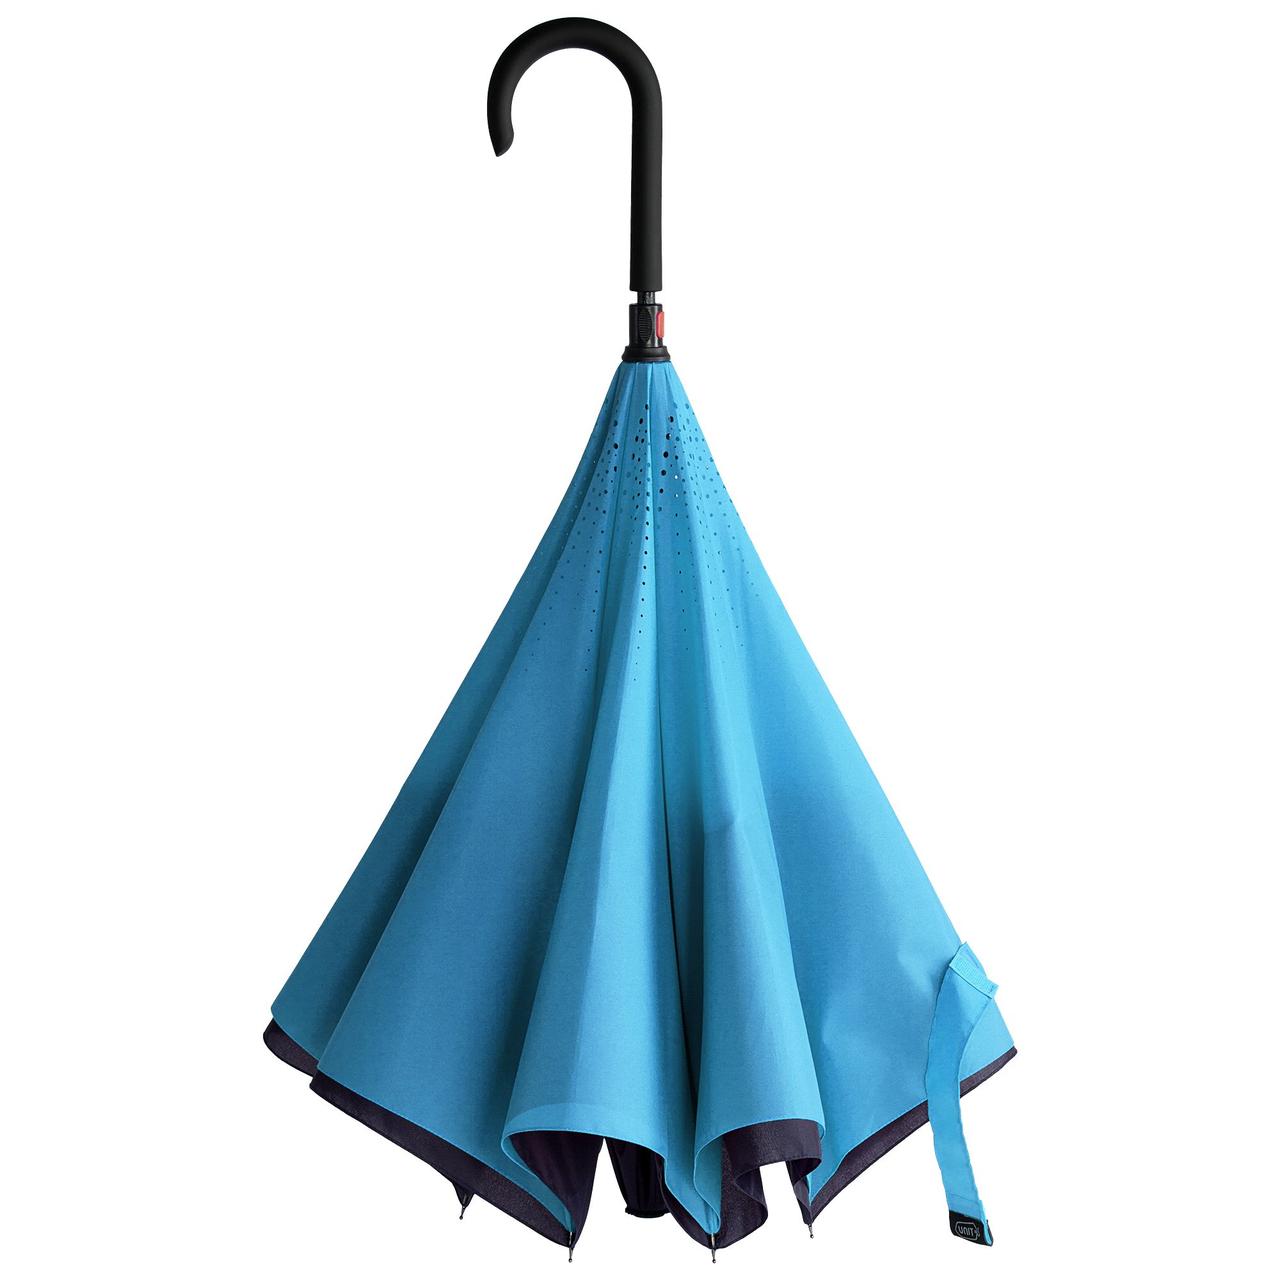 Зонт наоборот Unit Style, трость, сине-голубой (артикул 7772.40), фото 1